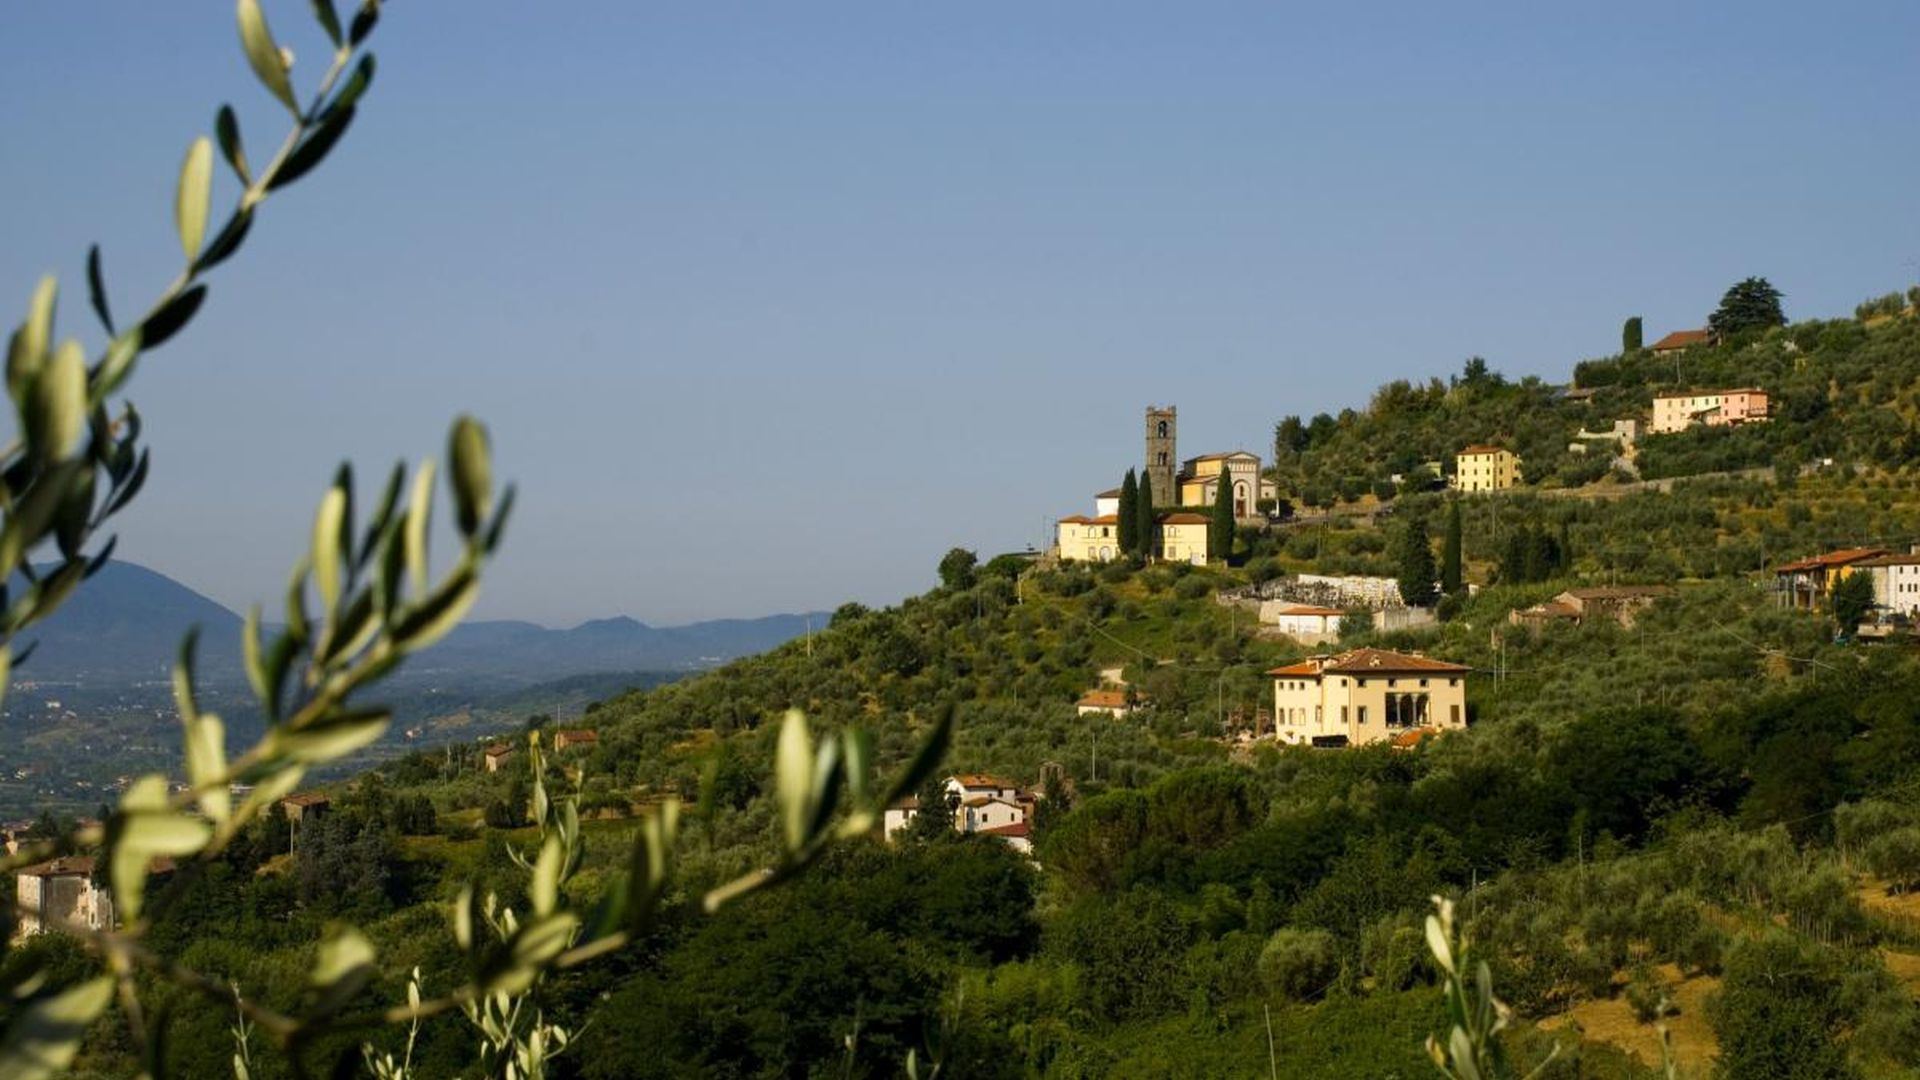 The hills around Lucca